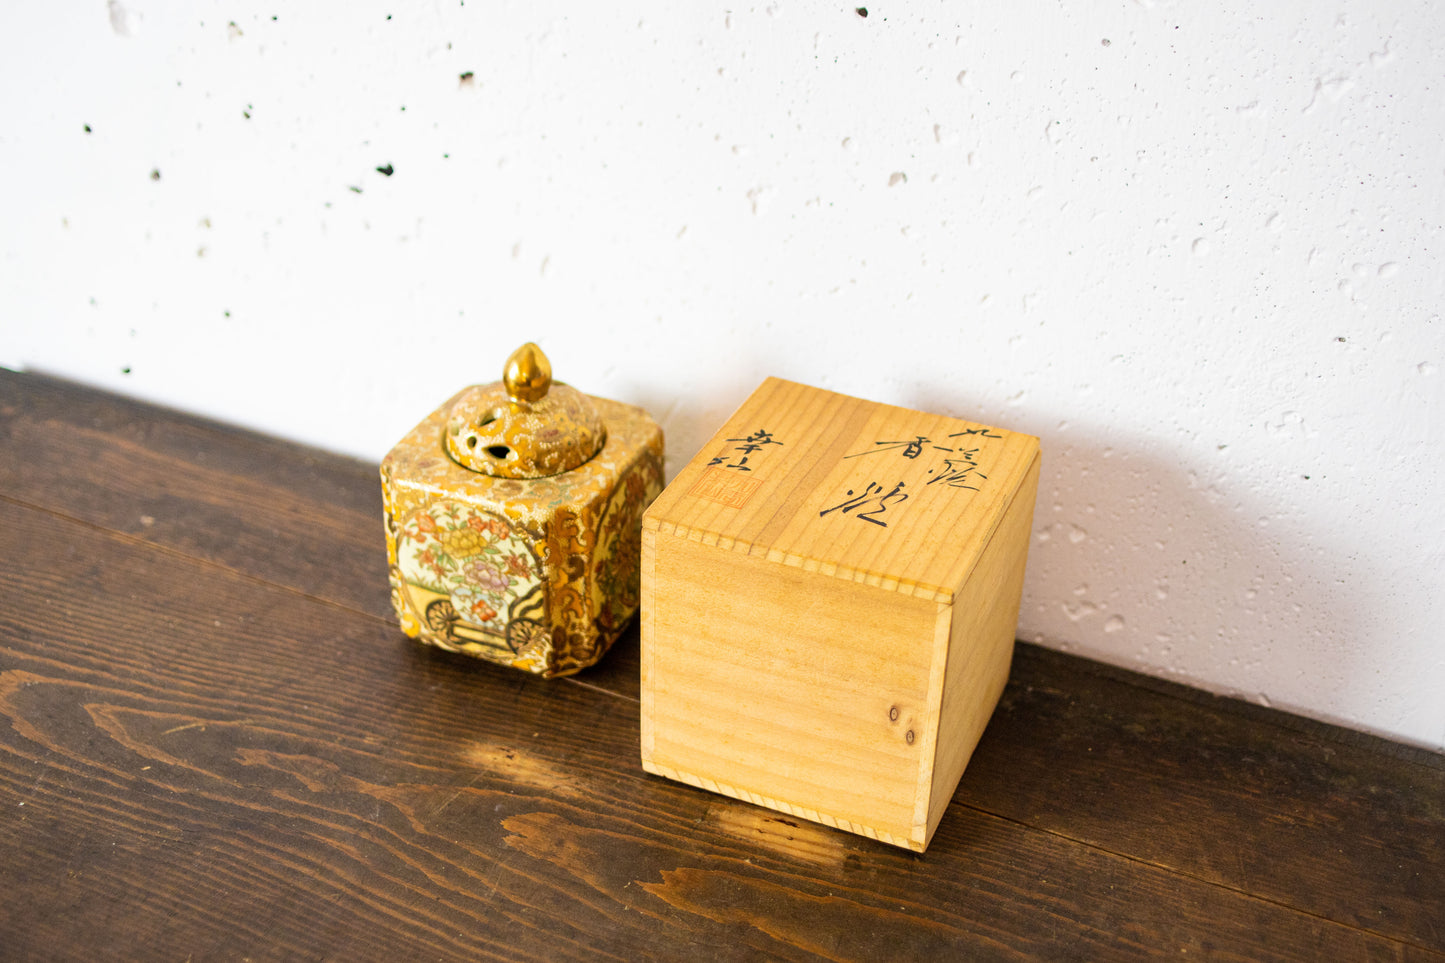 Kutani ware incense burner in wooden box.